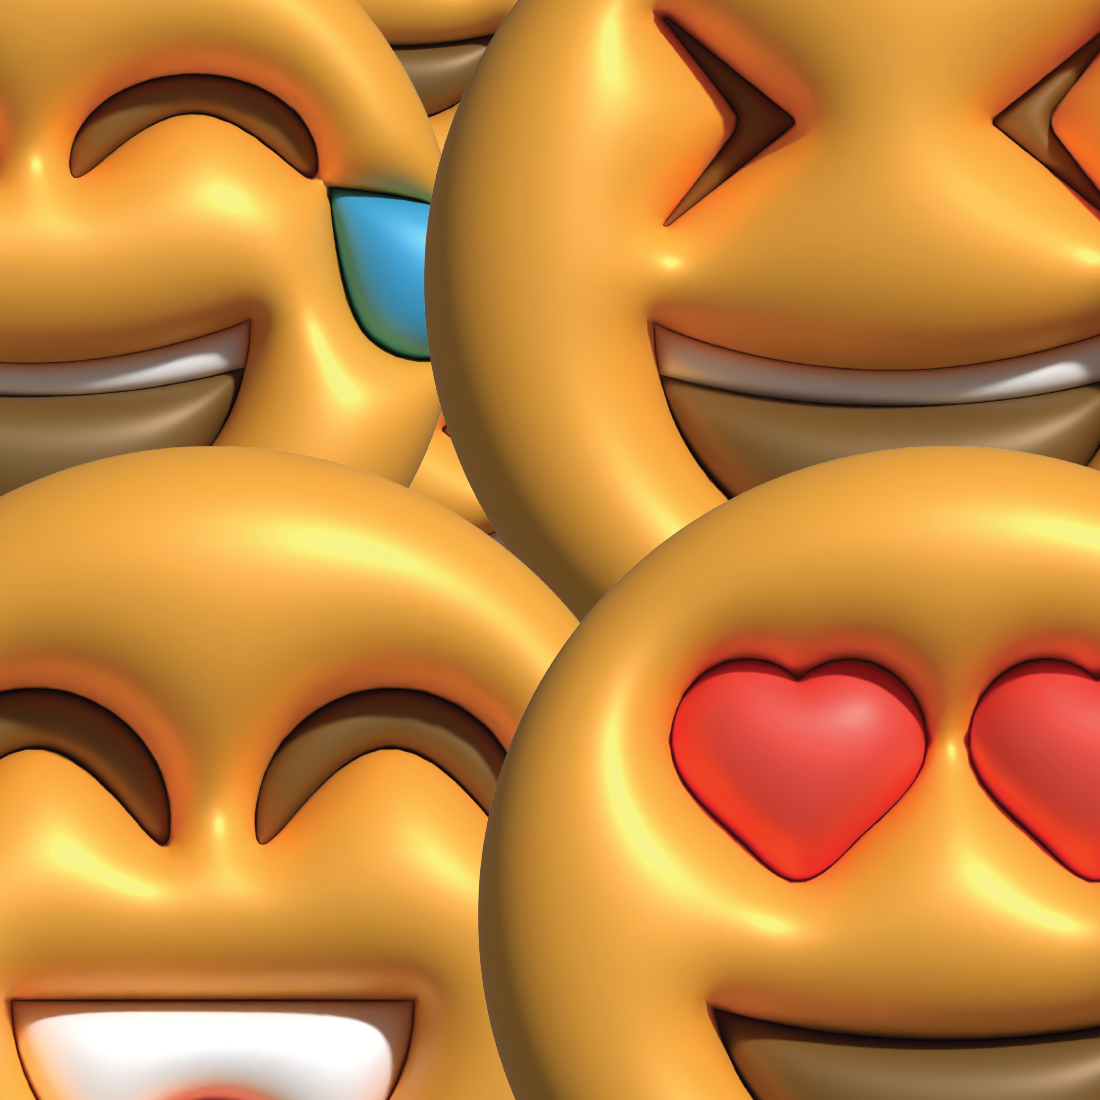 3D Emoticon 2 preview image.